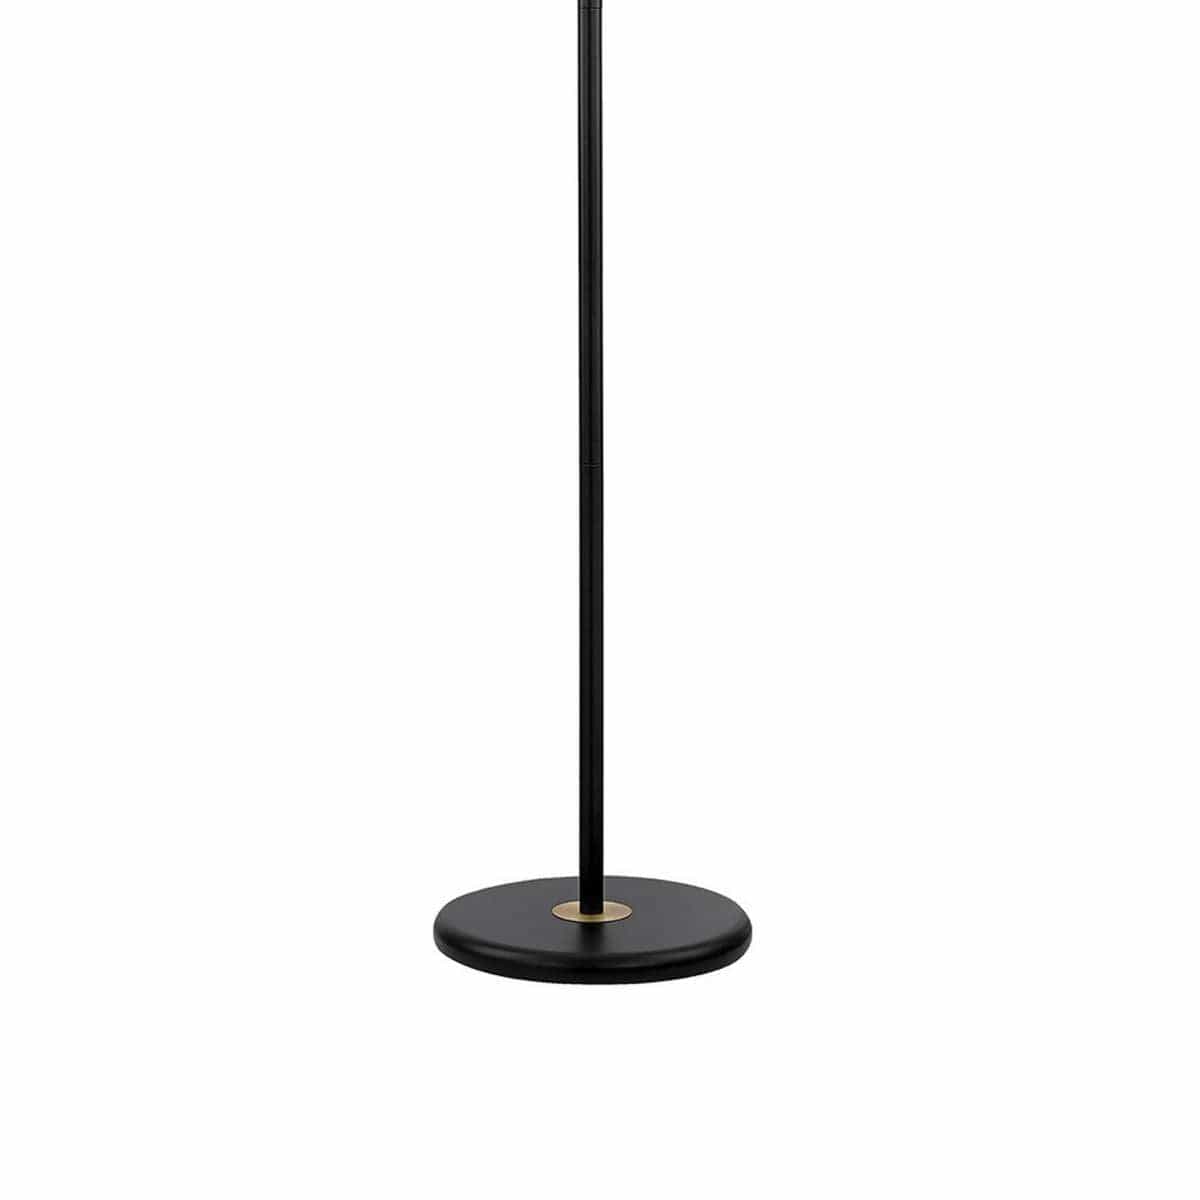 Benzara Tubular Metal Floor Lamp With Horn Style Shade, Black By Benzara Floor Lamps BM233239